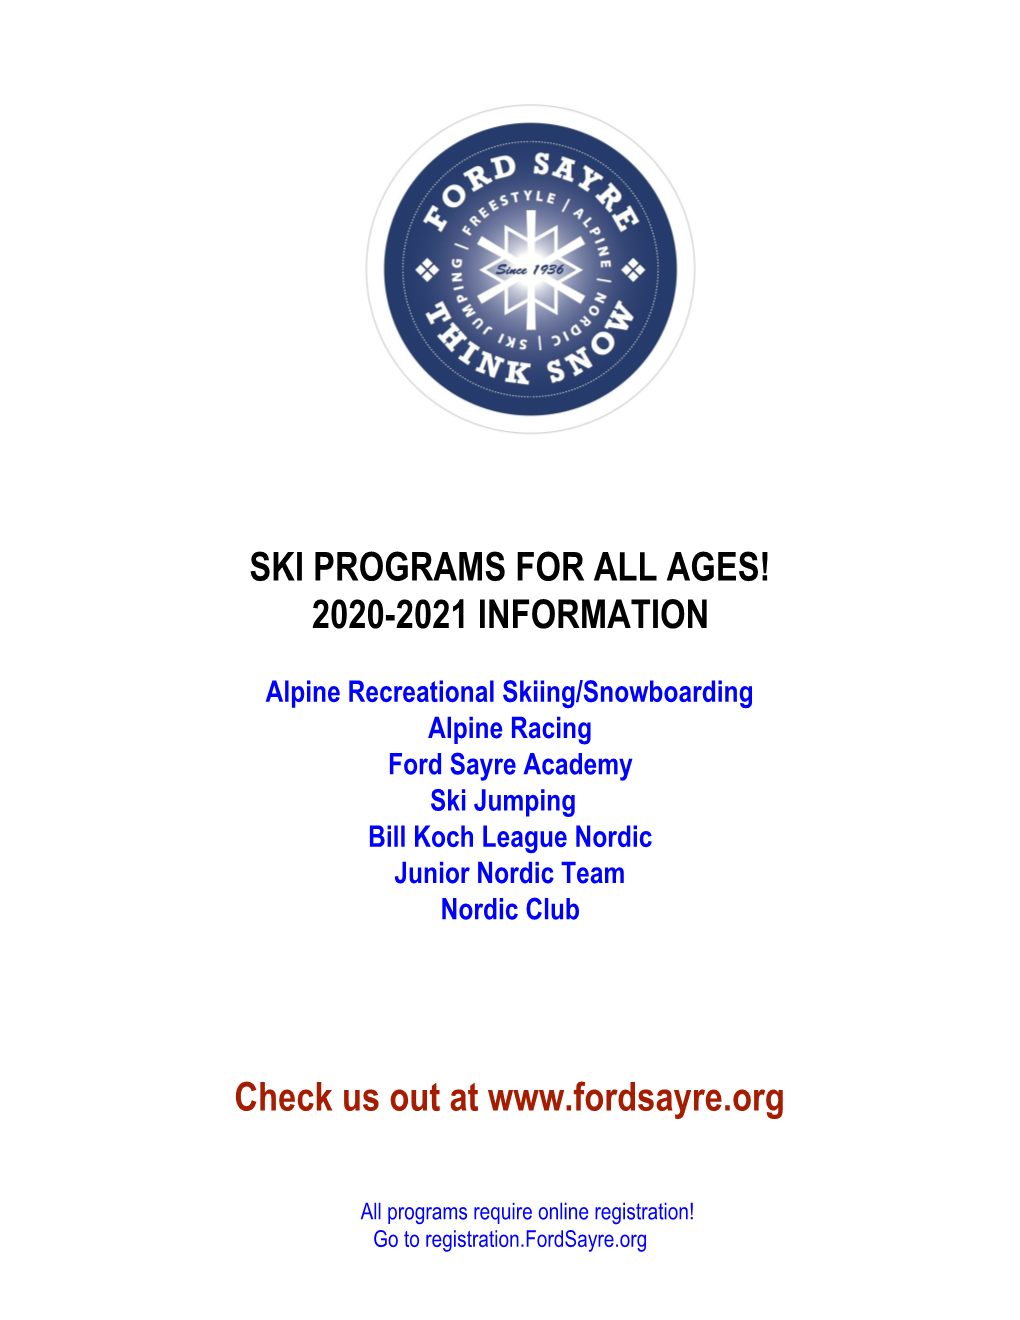 Ski Programs for All Ages! 2020-2021 Information